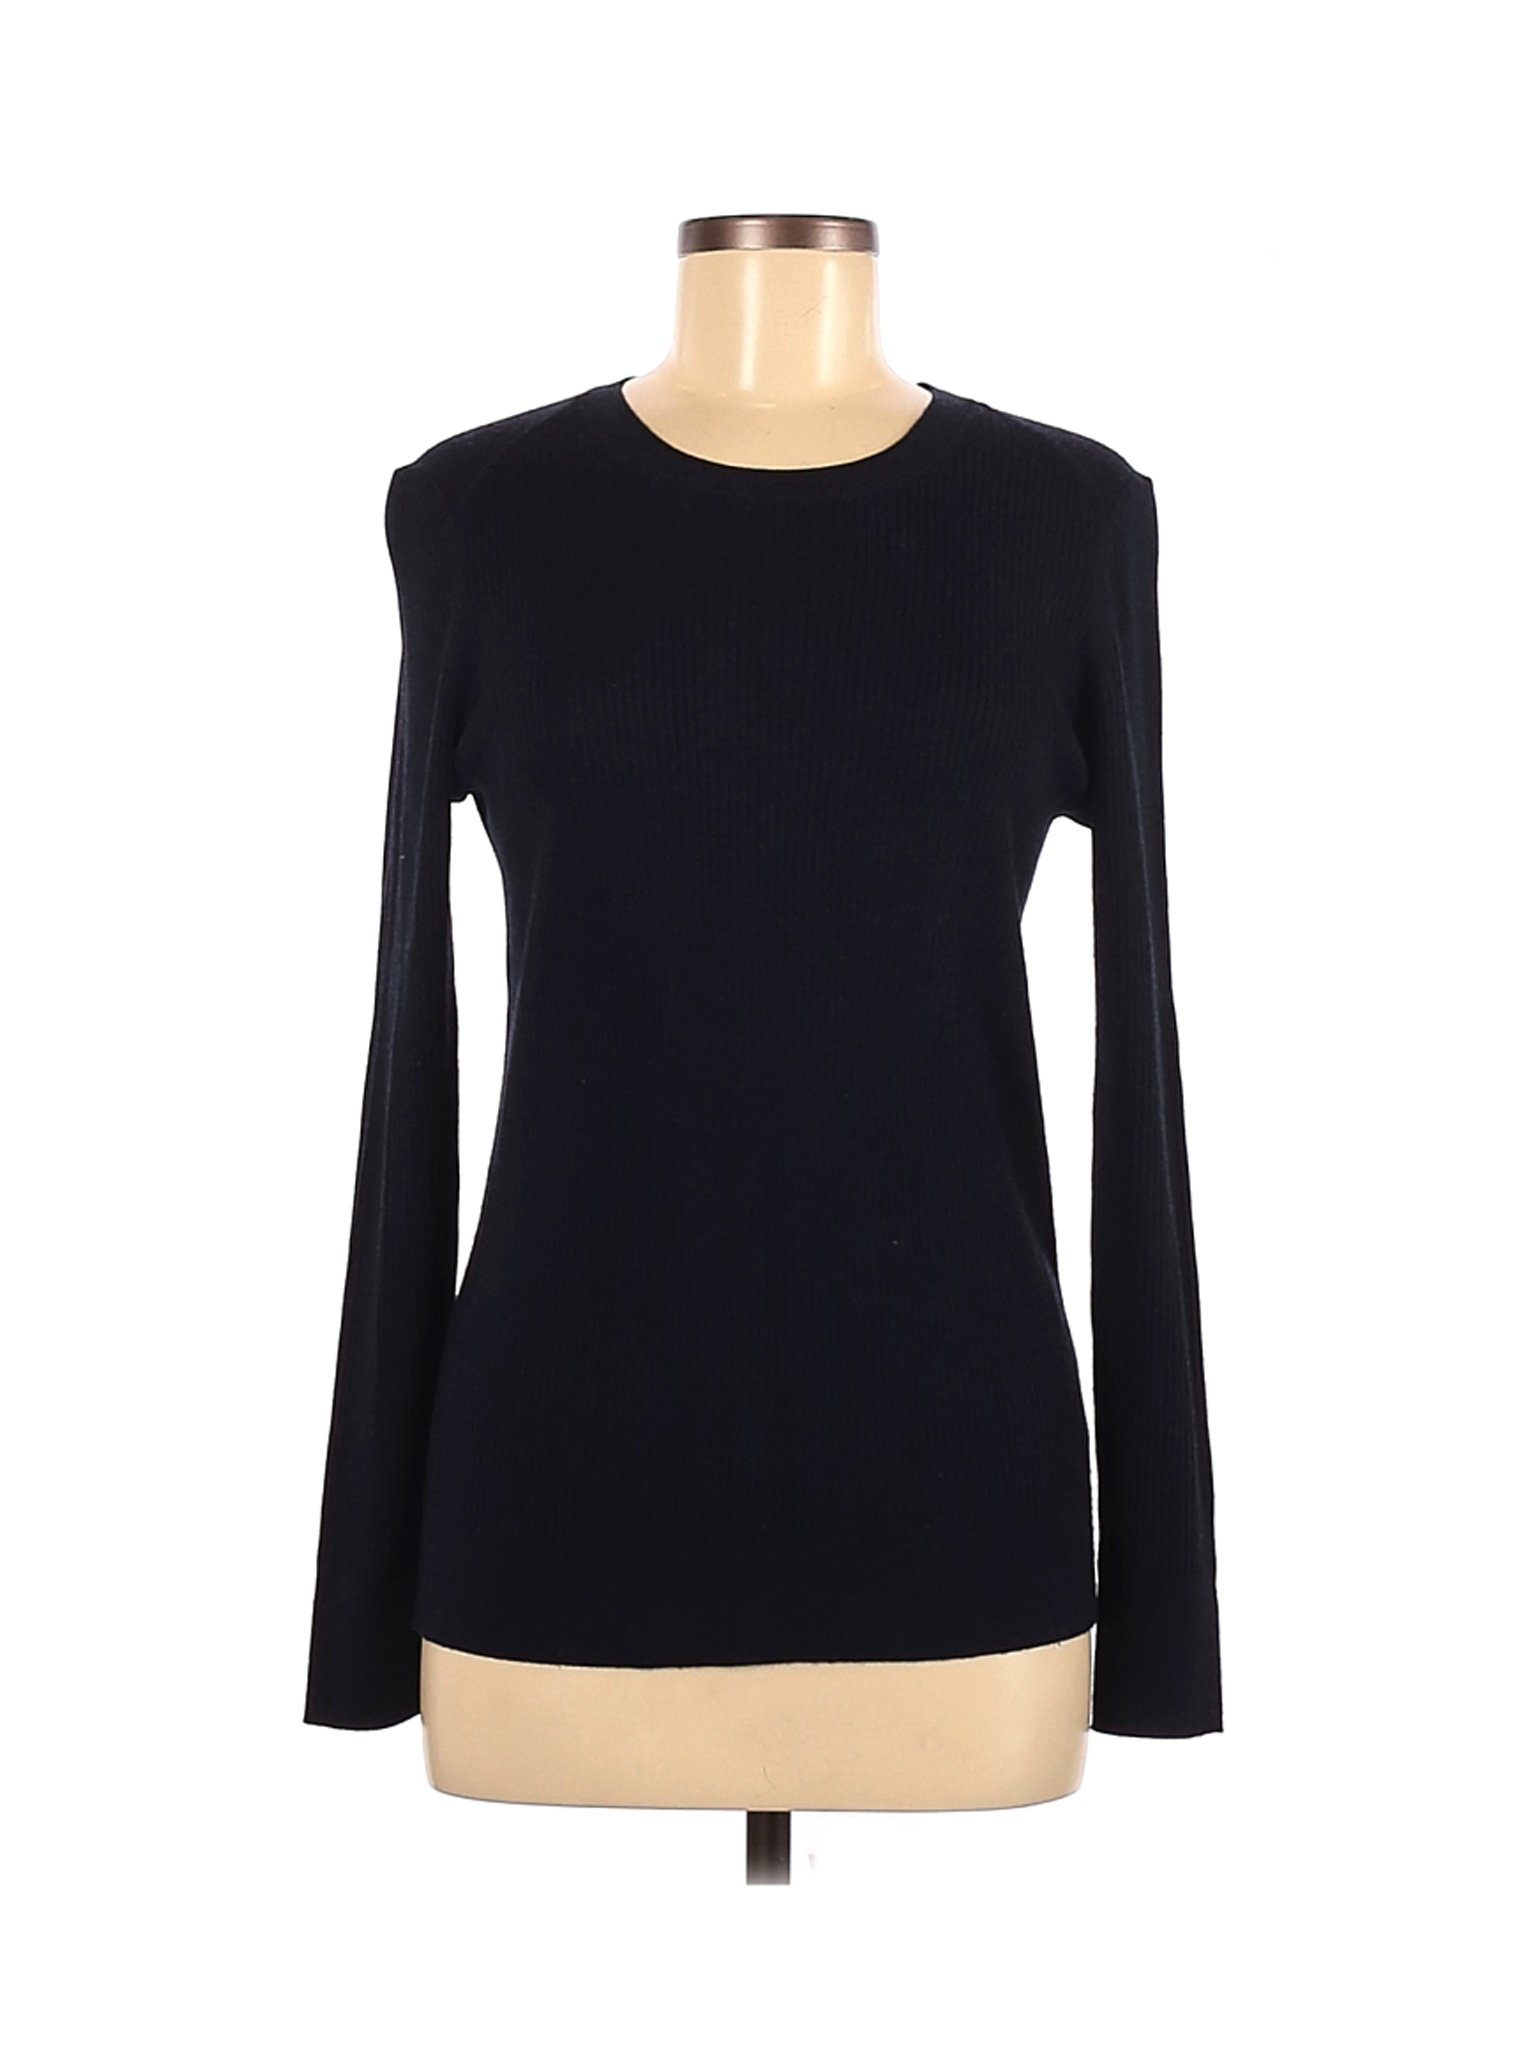 Banana Republic Women Black Wool Pullover Sweater M | eBay